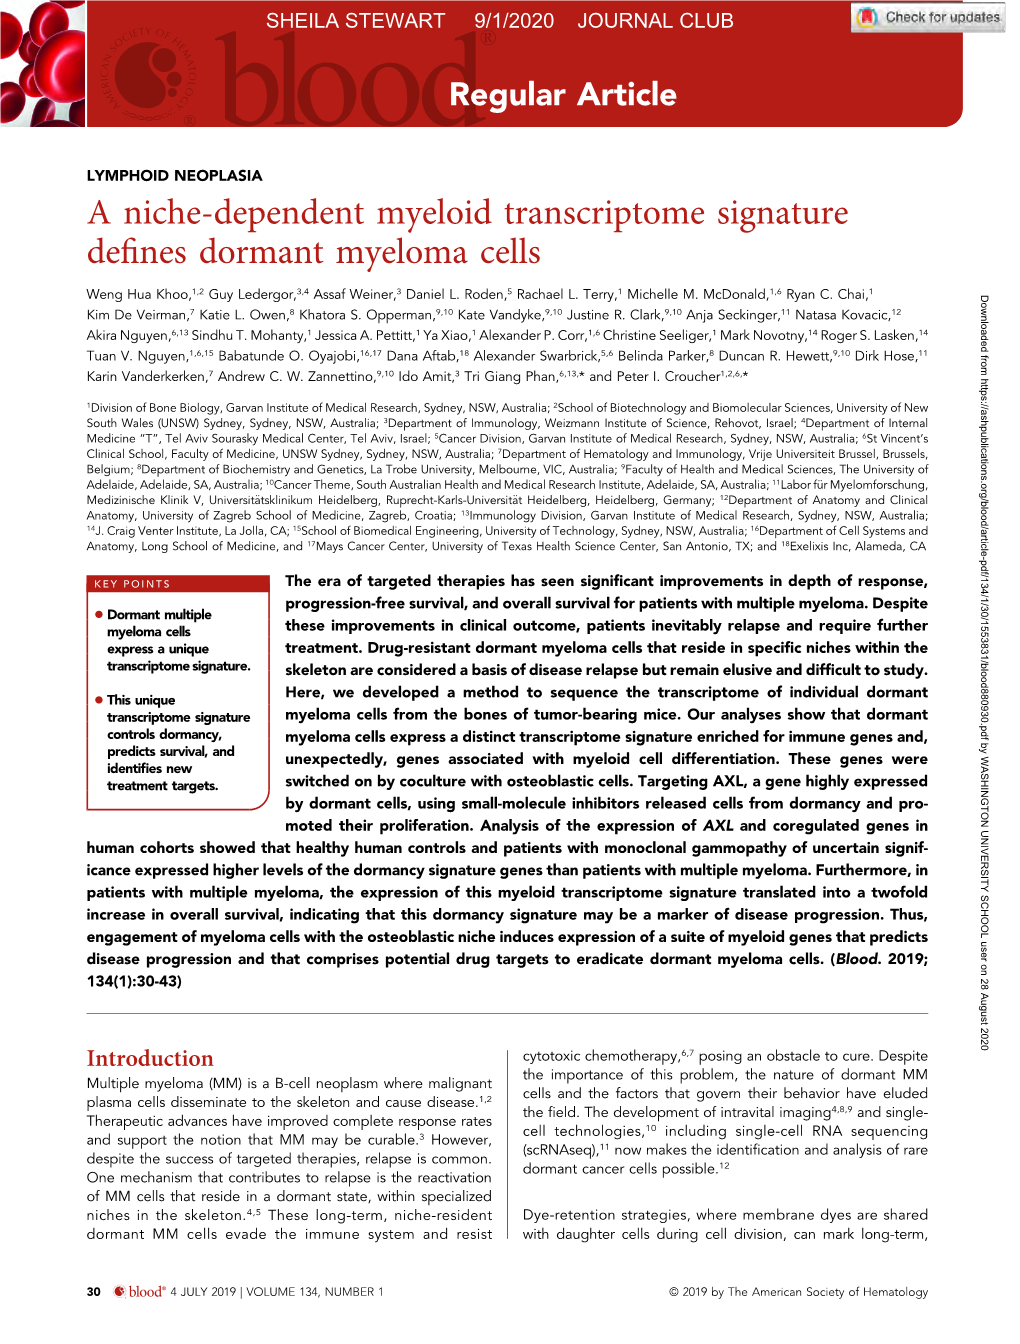 A Niche-Dependent Myeloid Transcriptome Signature Deﬁnes Dormant Myeloma Cells